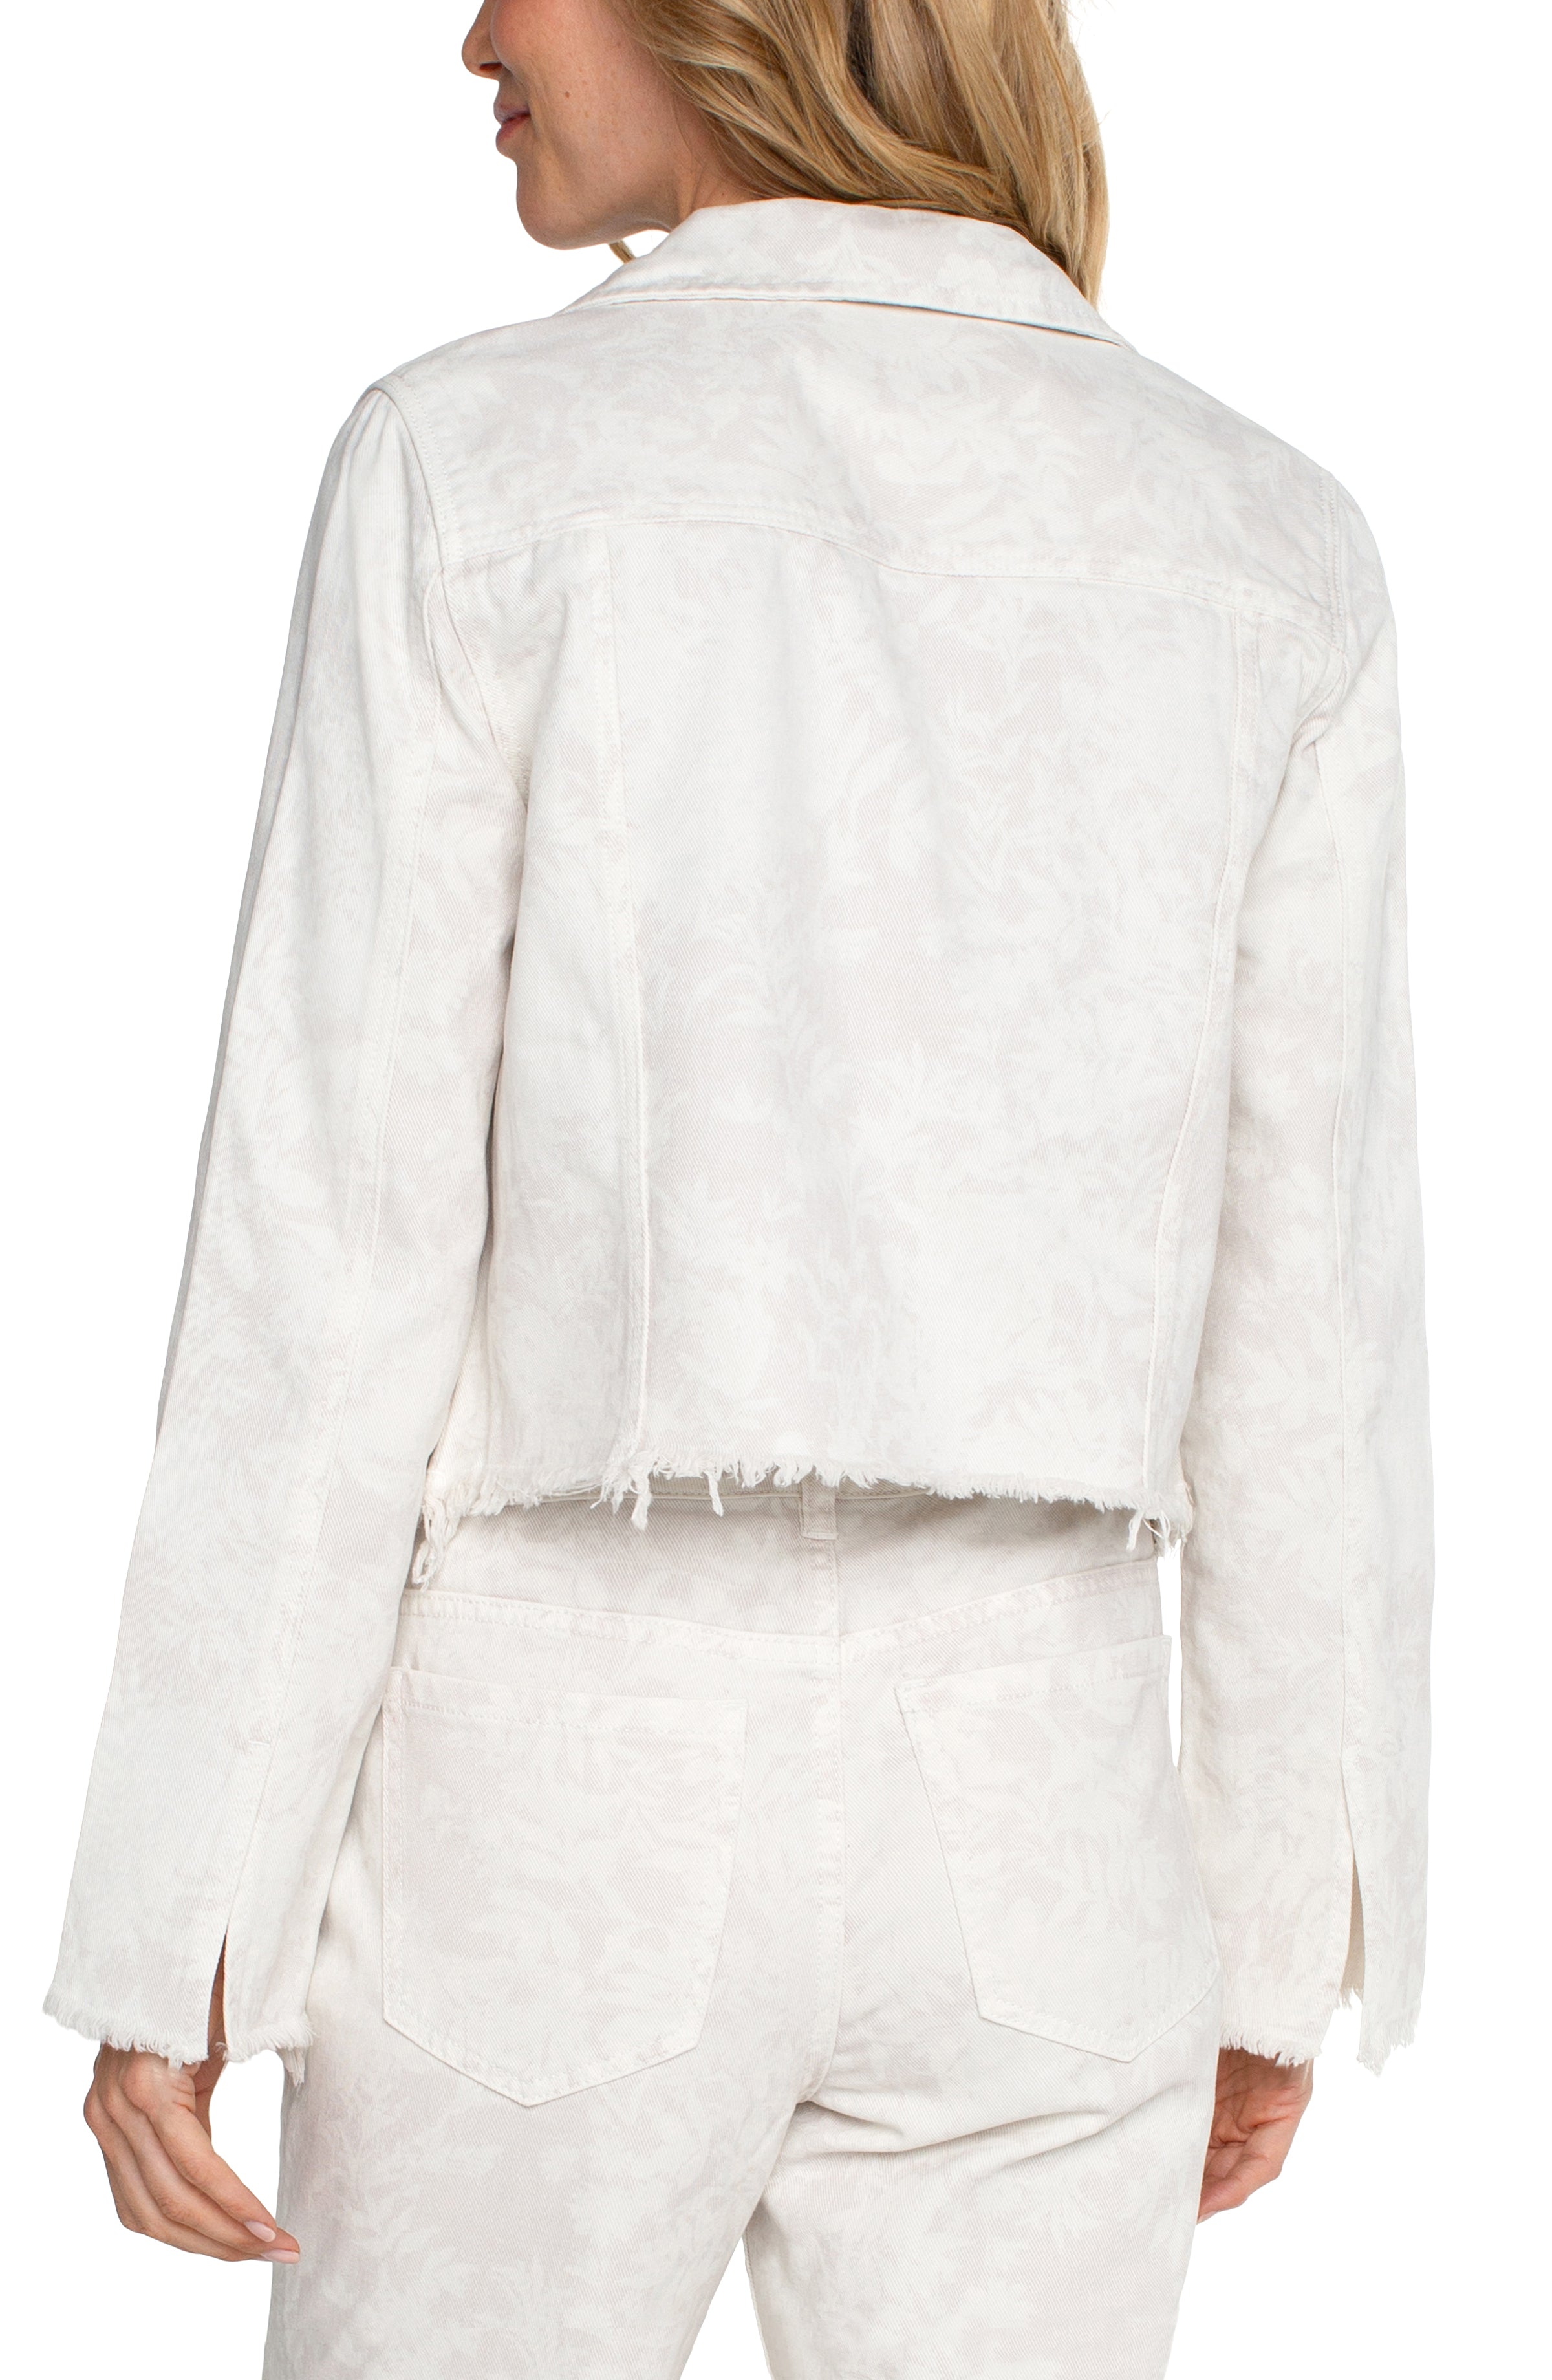 LVP Printed Cropped Jacket with Fray Hem - Ecru White Floral Back View